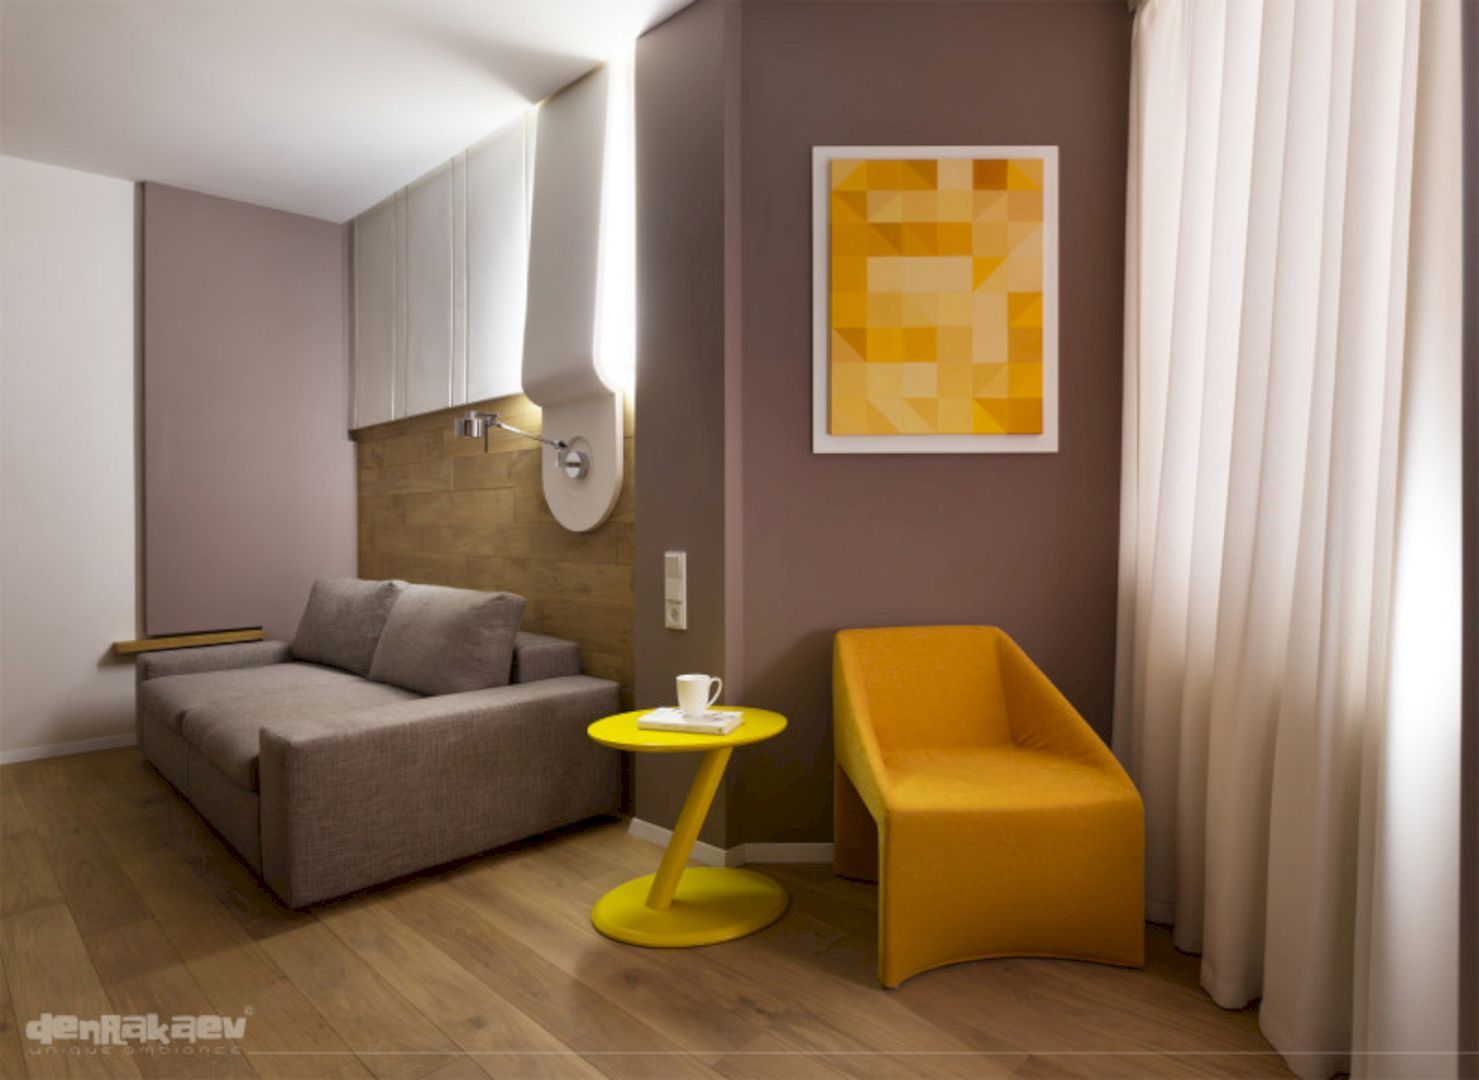 The futuristic apartment that Denis Rakaev created – Moon Box